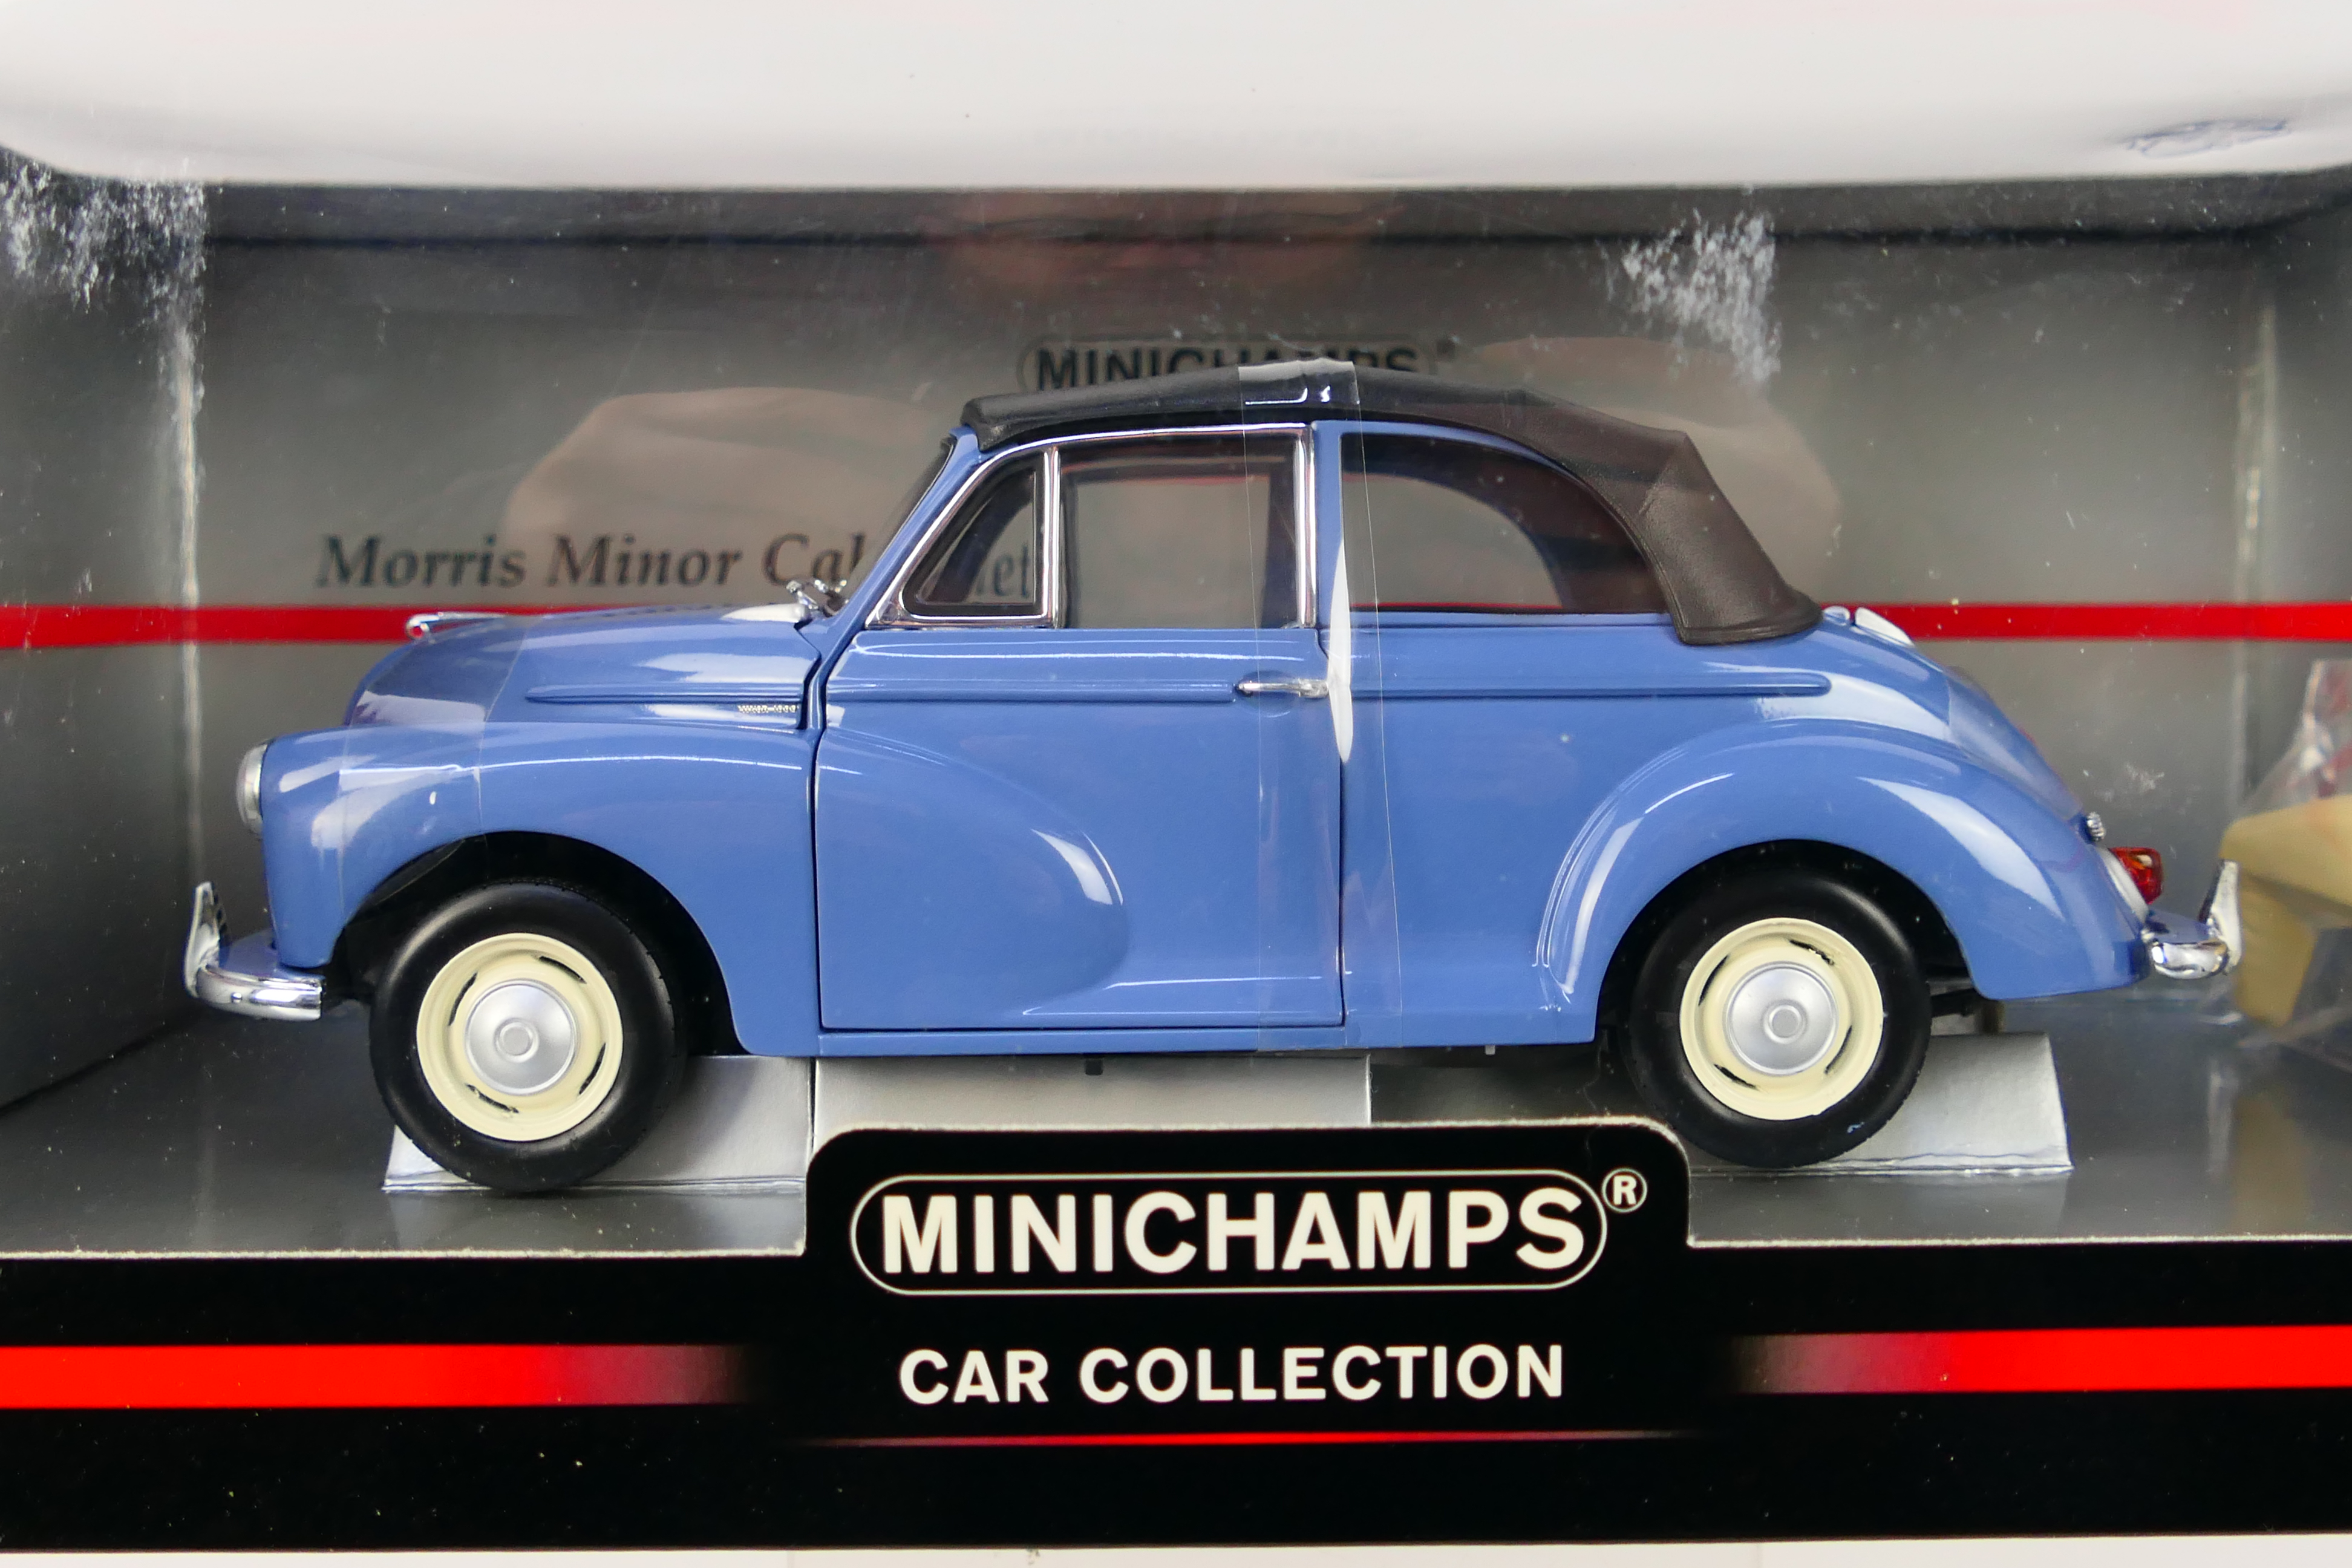 Minichamps - A boxed Minichamps #150137030 1:18 scale Morris minor Cabriolet. - Image 2 of 3